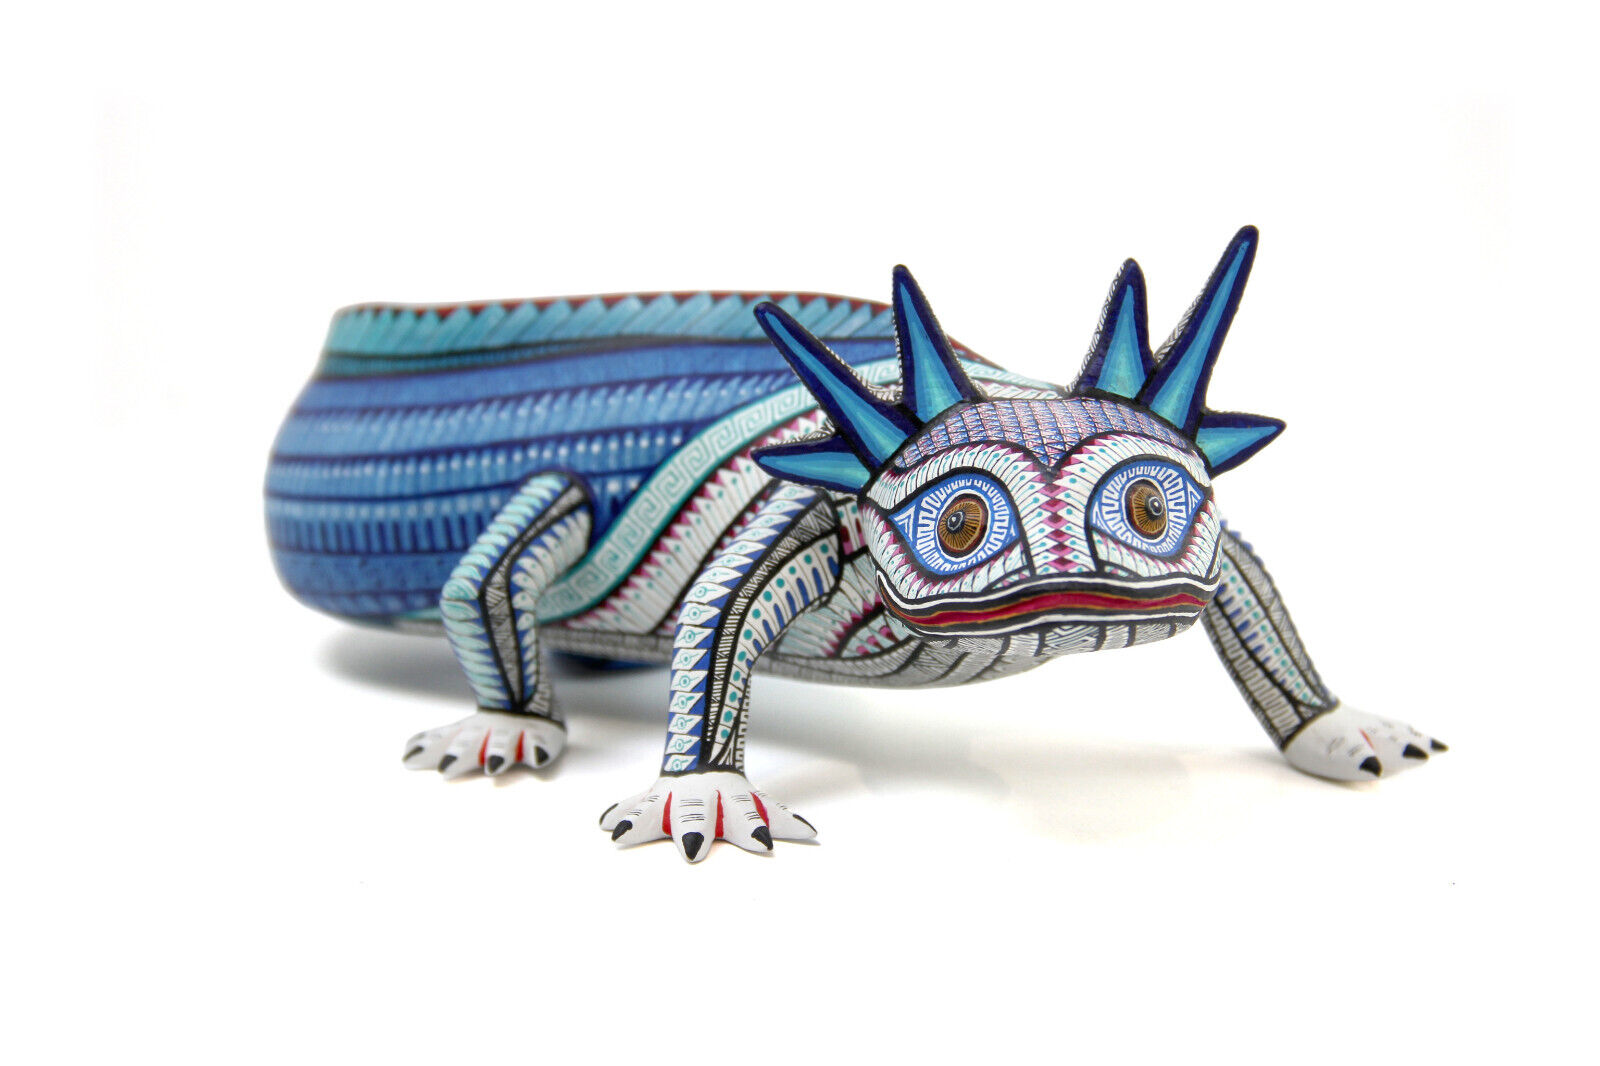 Oaxaca Alebrije Axolotl 8 in. | Hand-painted wood carving mexican artwork